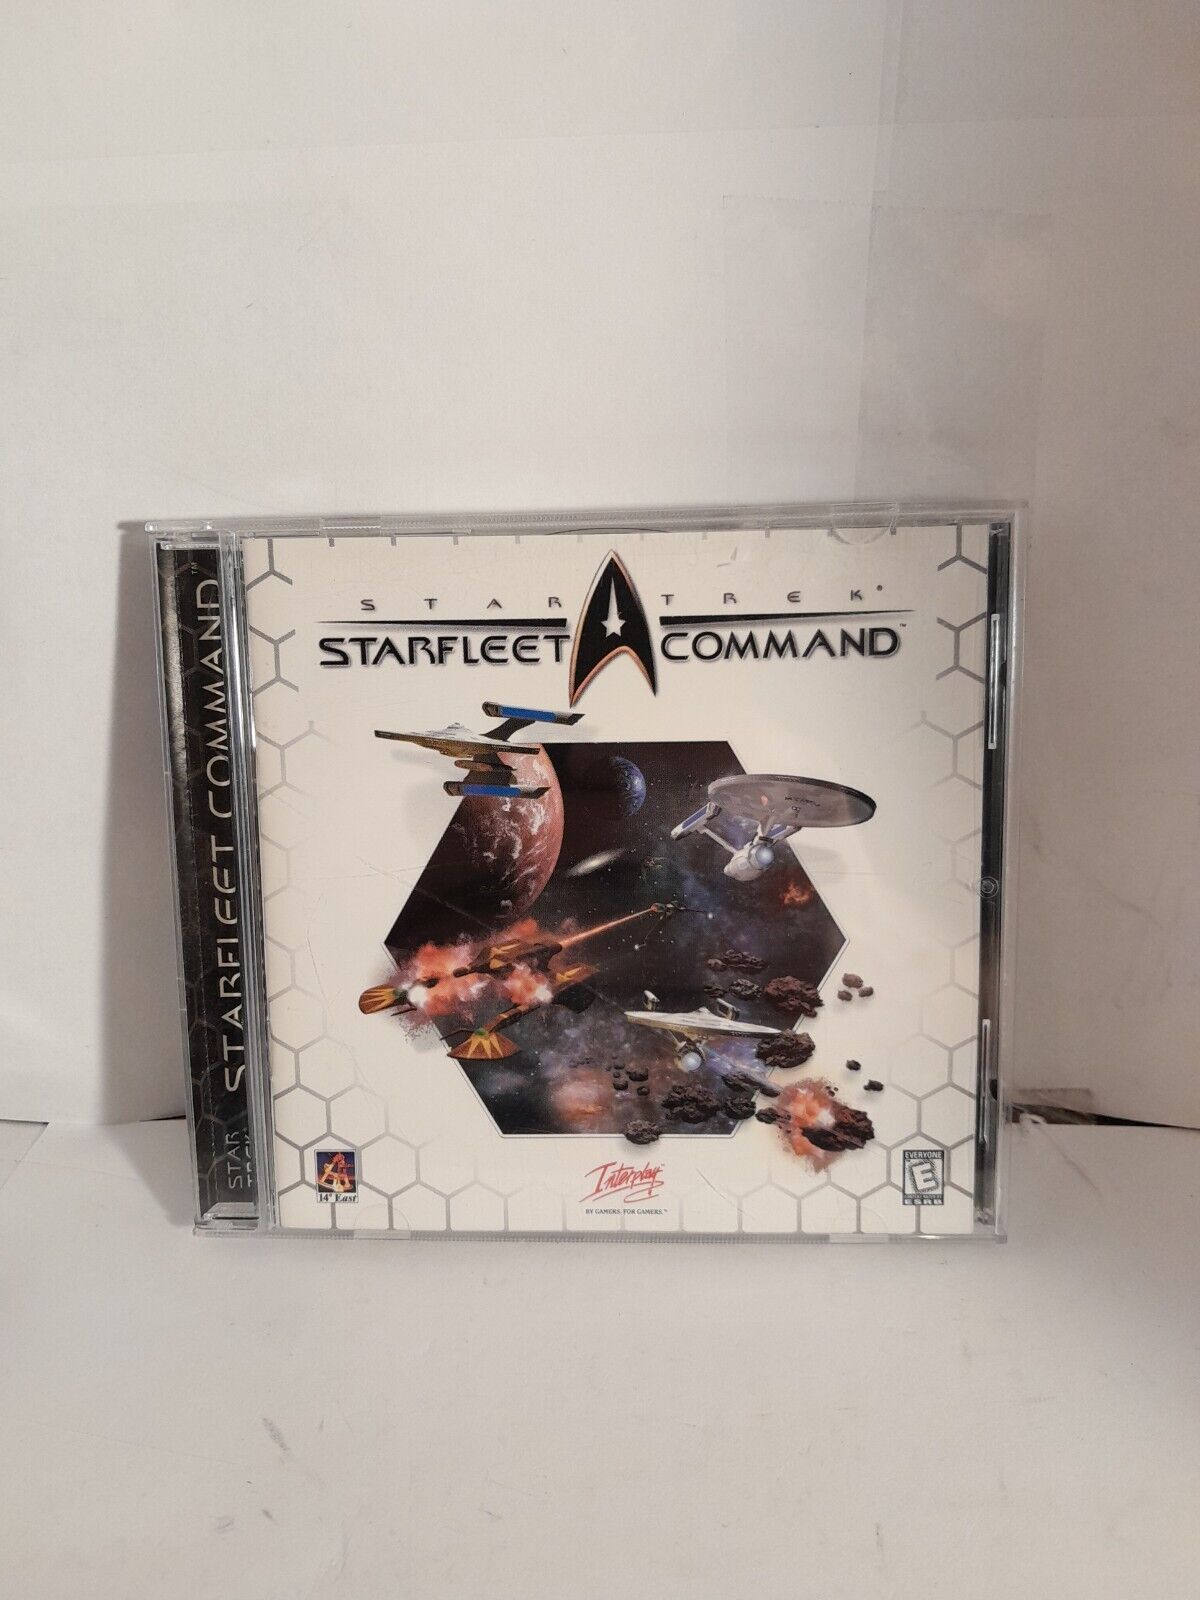 Star Trek: Starfleet Command (PC, 1999) CD Rom Game Disc complete